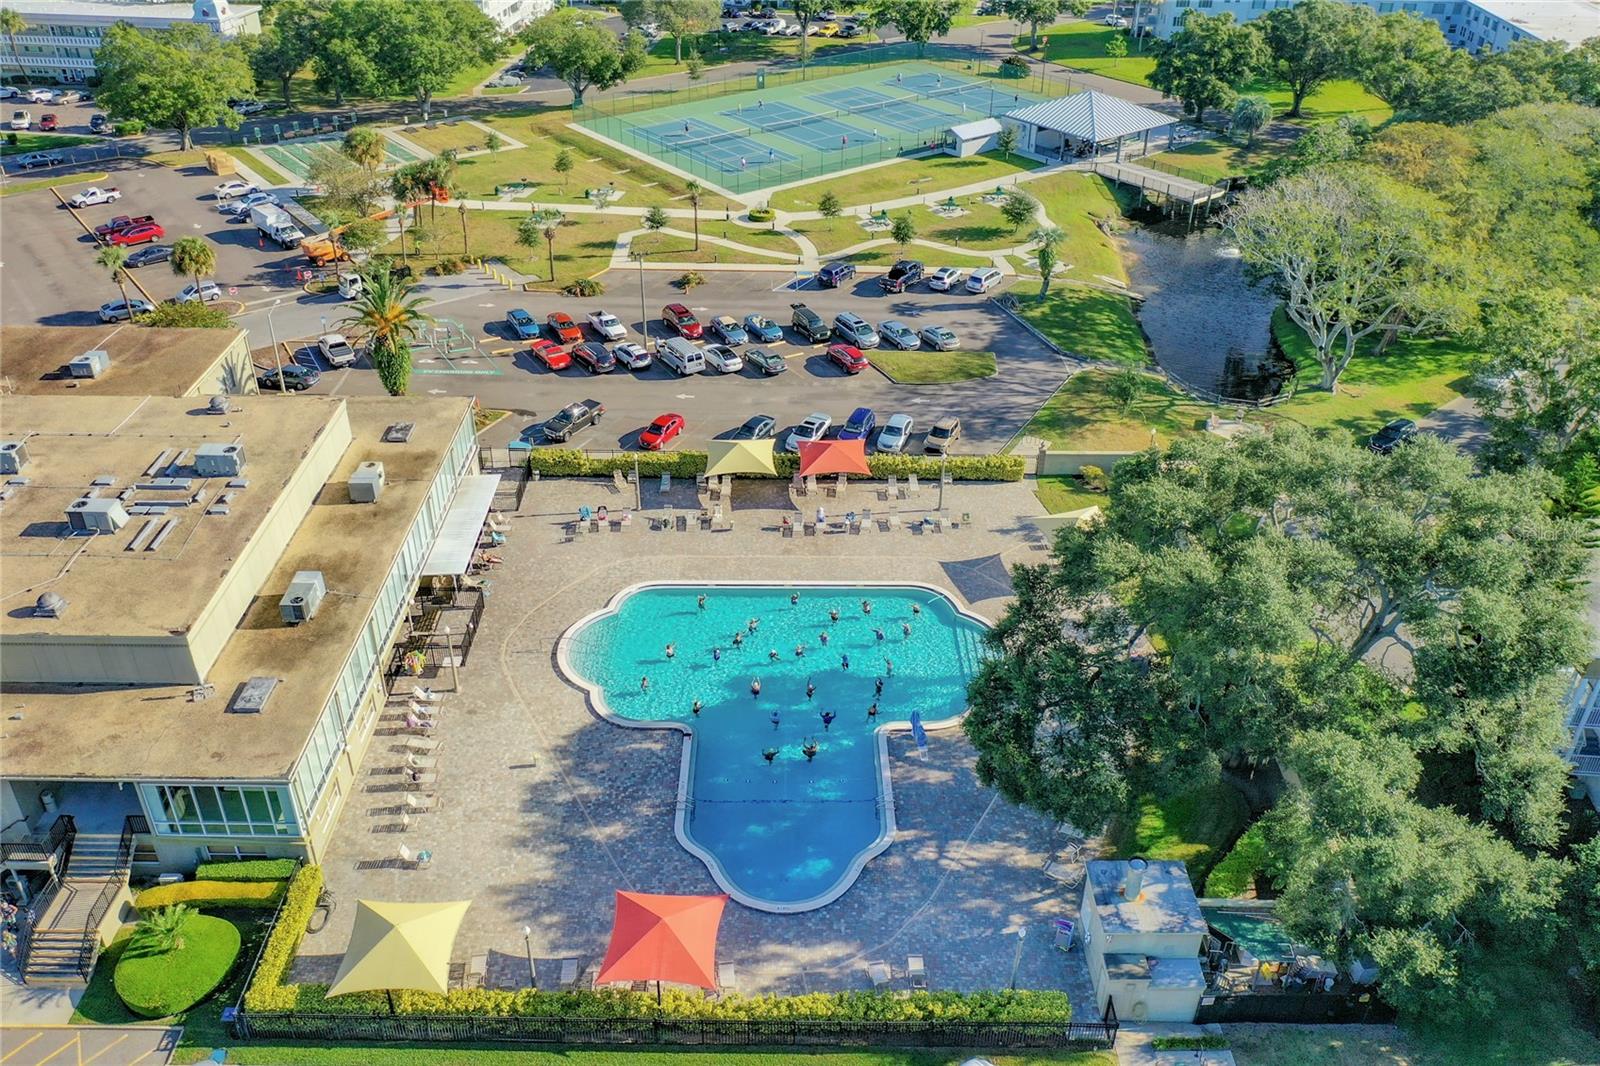 Recreation building - large community pool